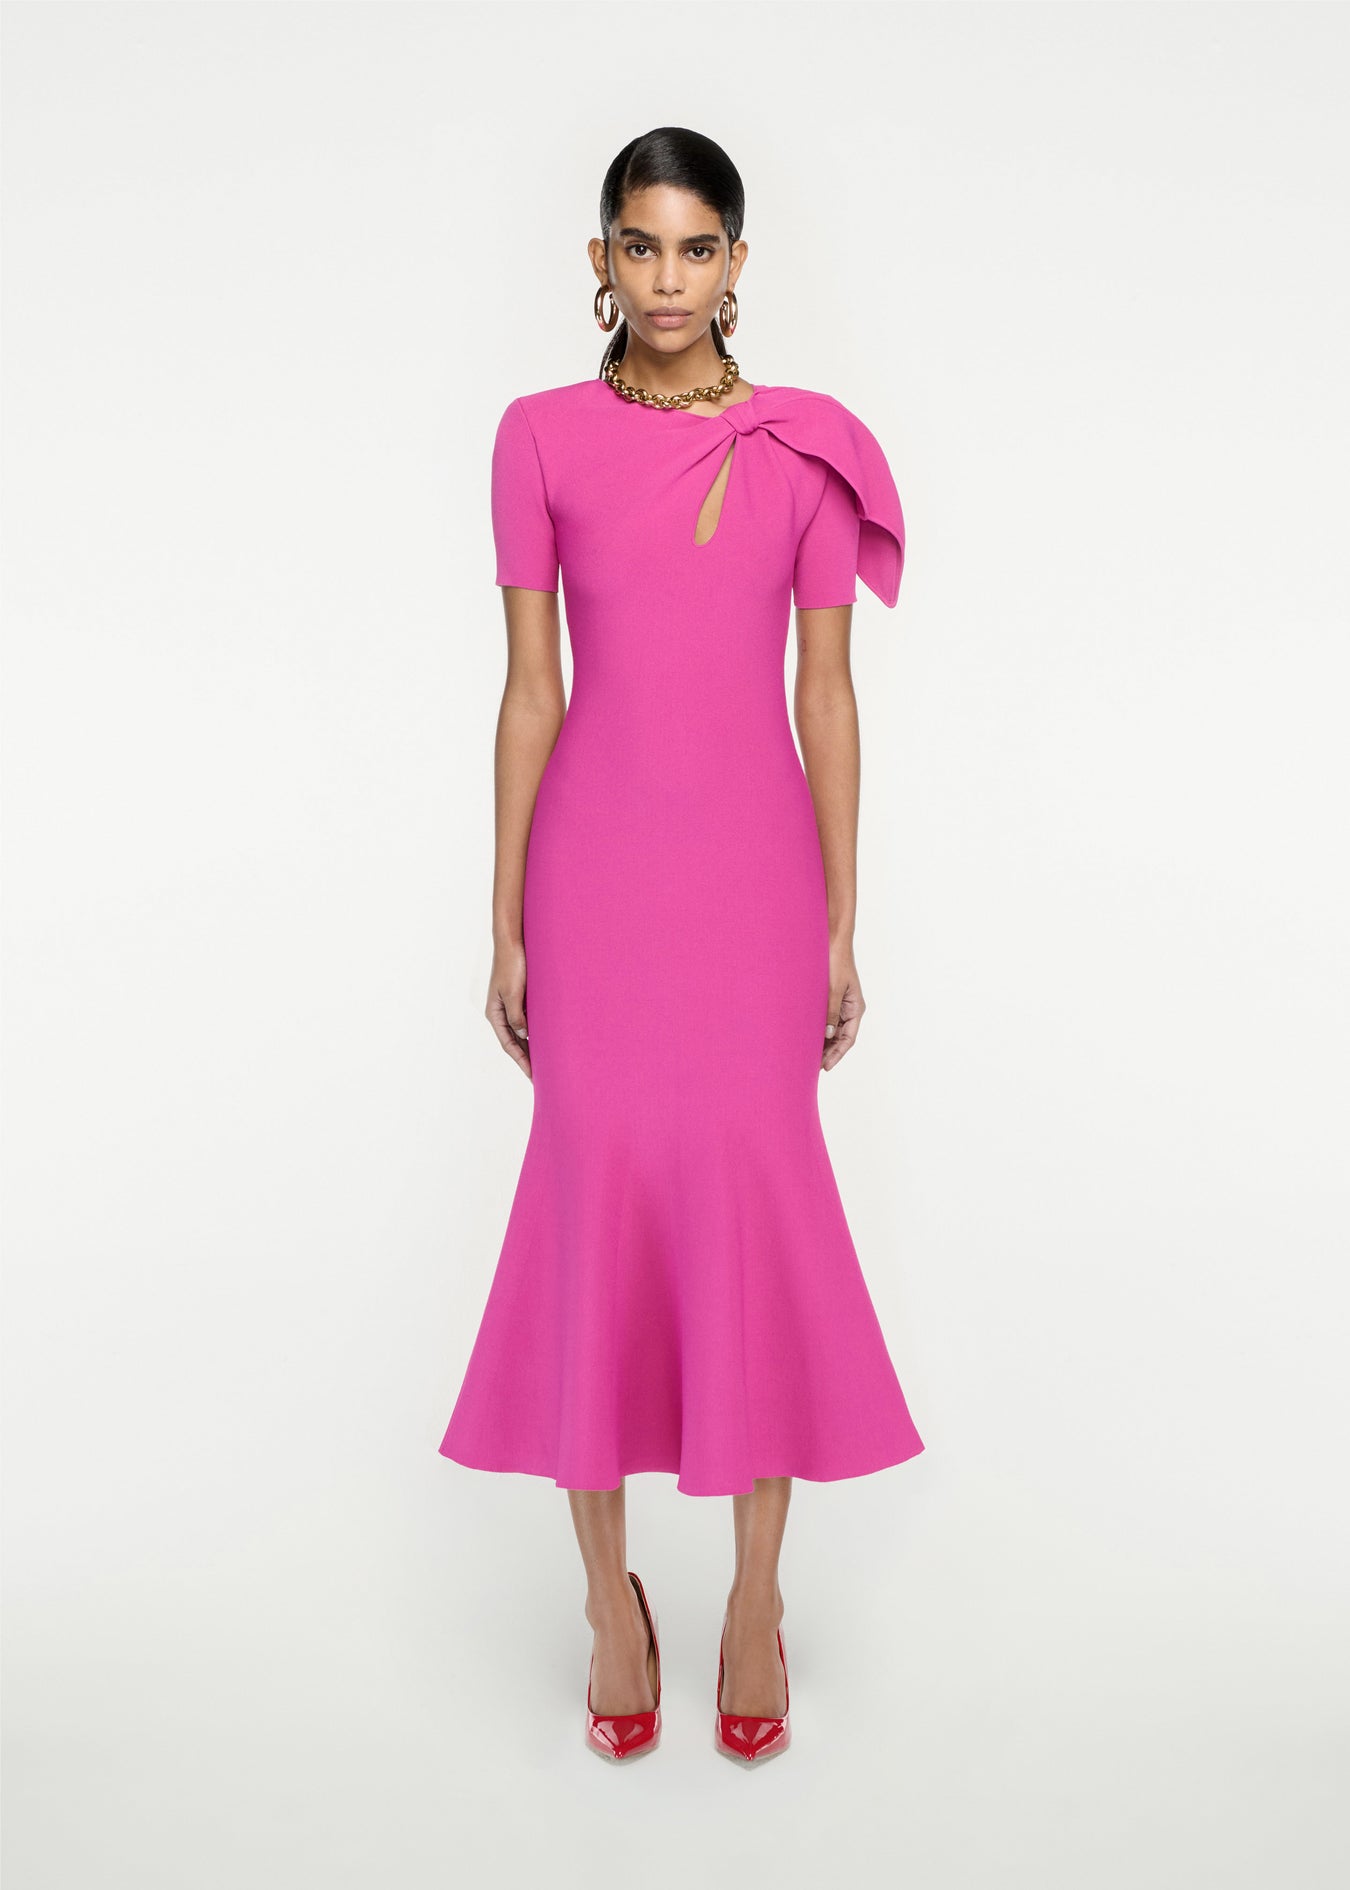 Woman wearing the Short Sleeve Knit Midi Dress in Pink